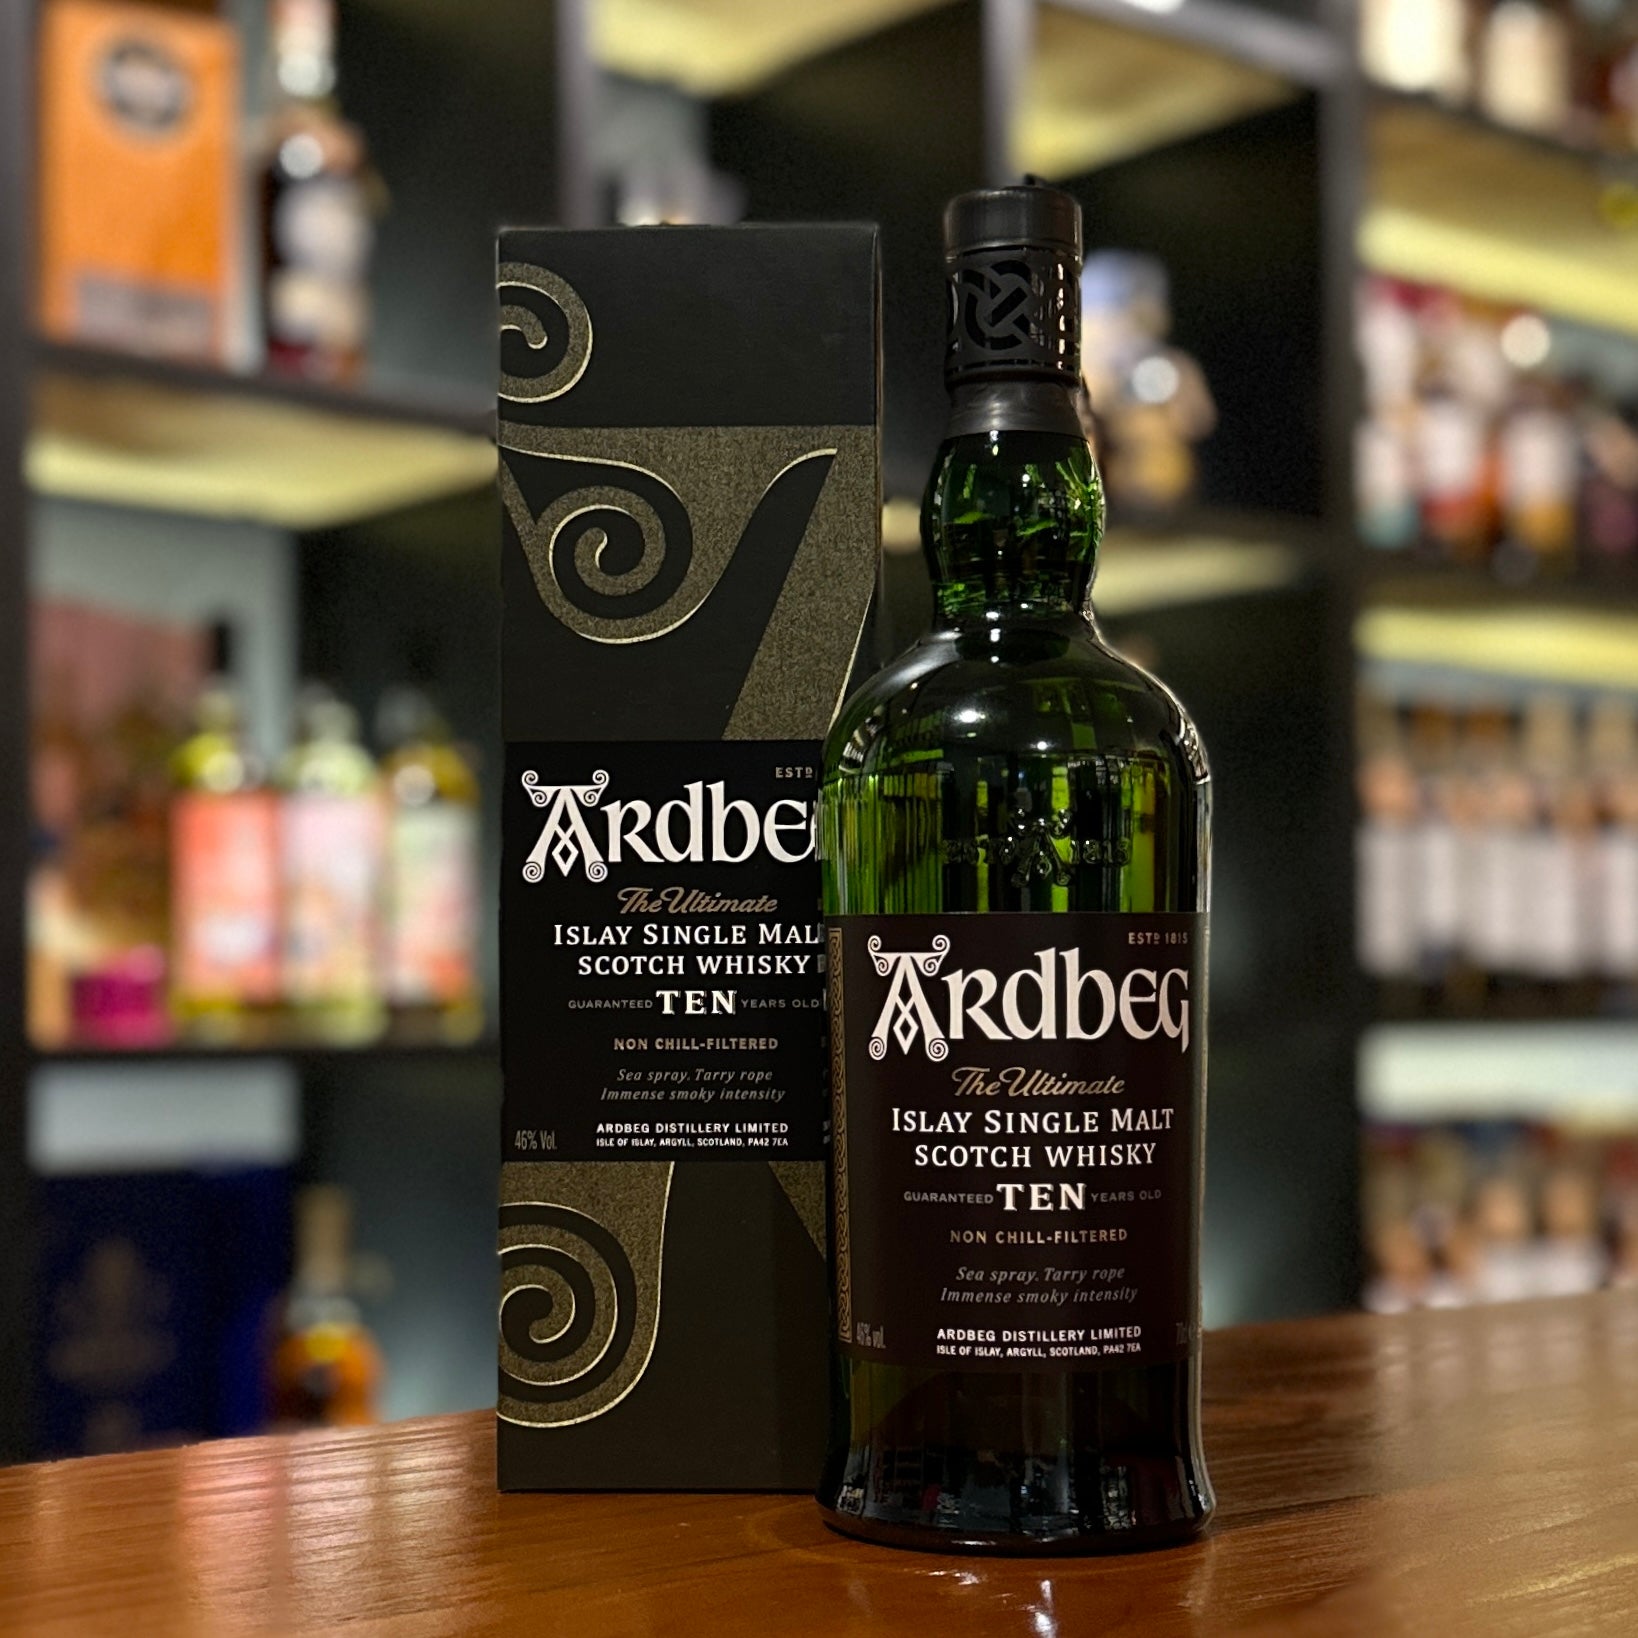 Ardbeg – The Central Whisky